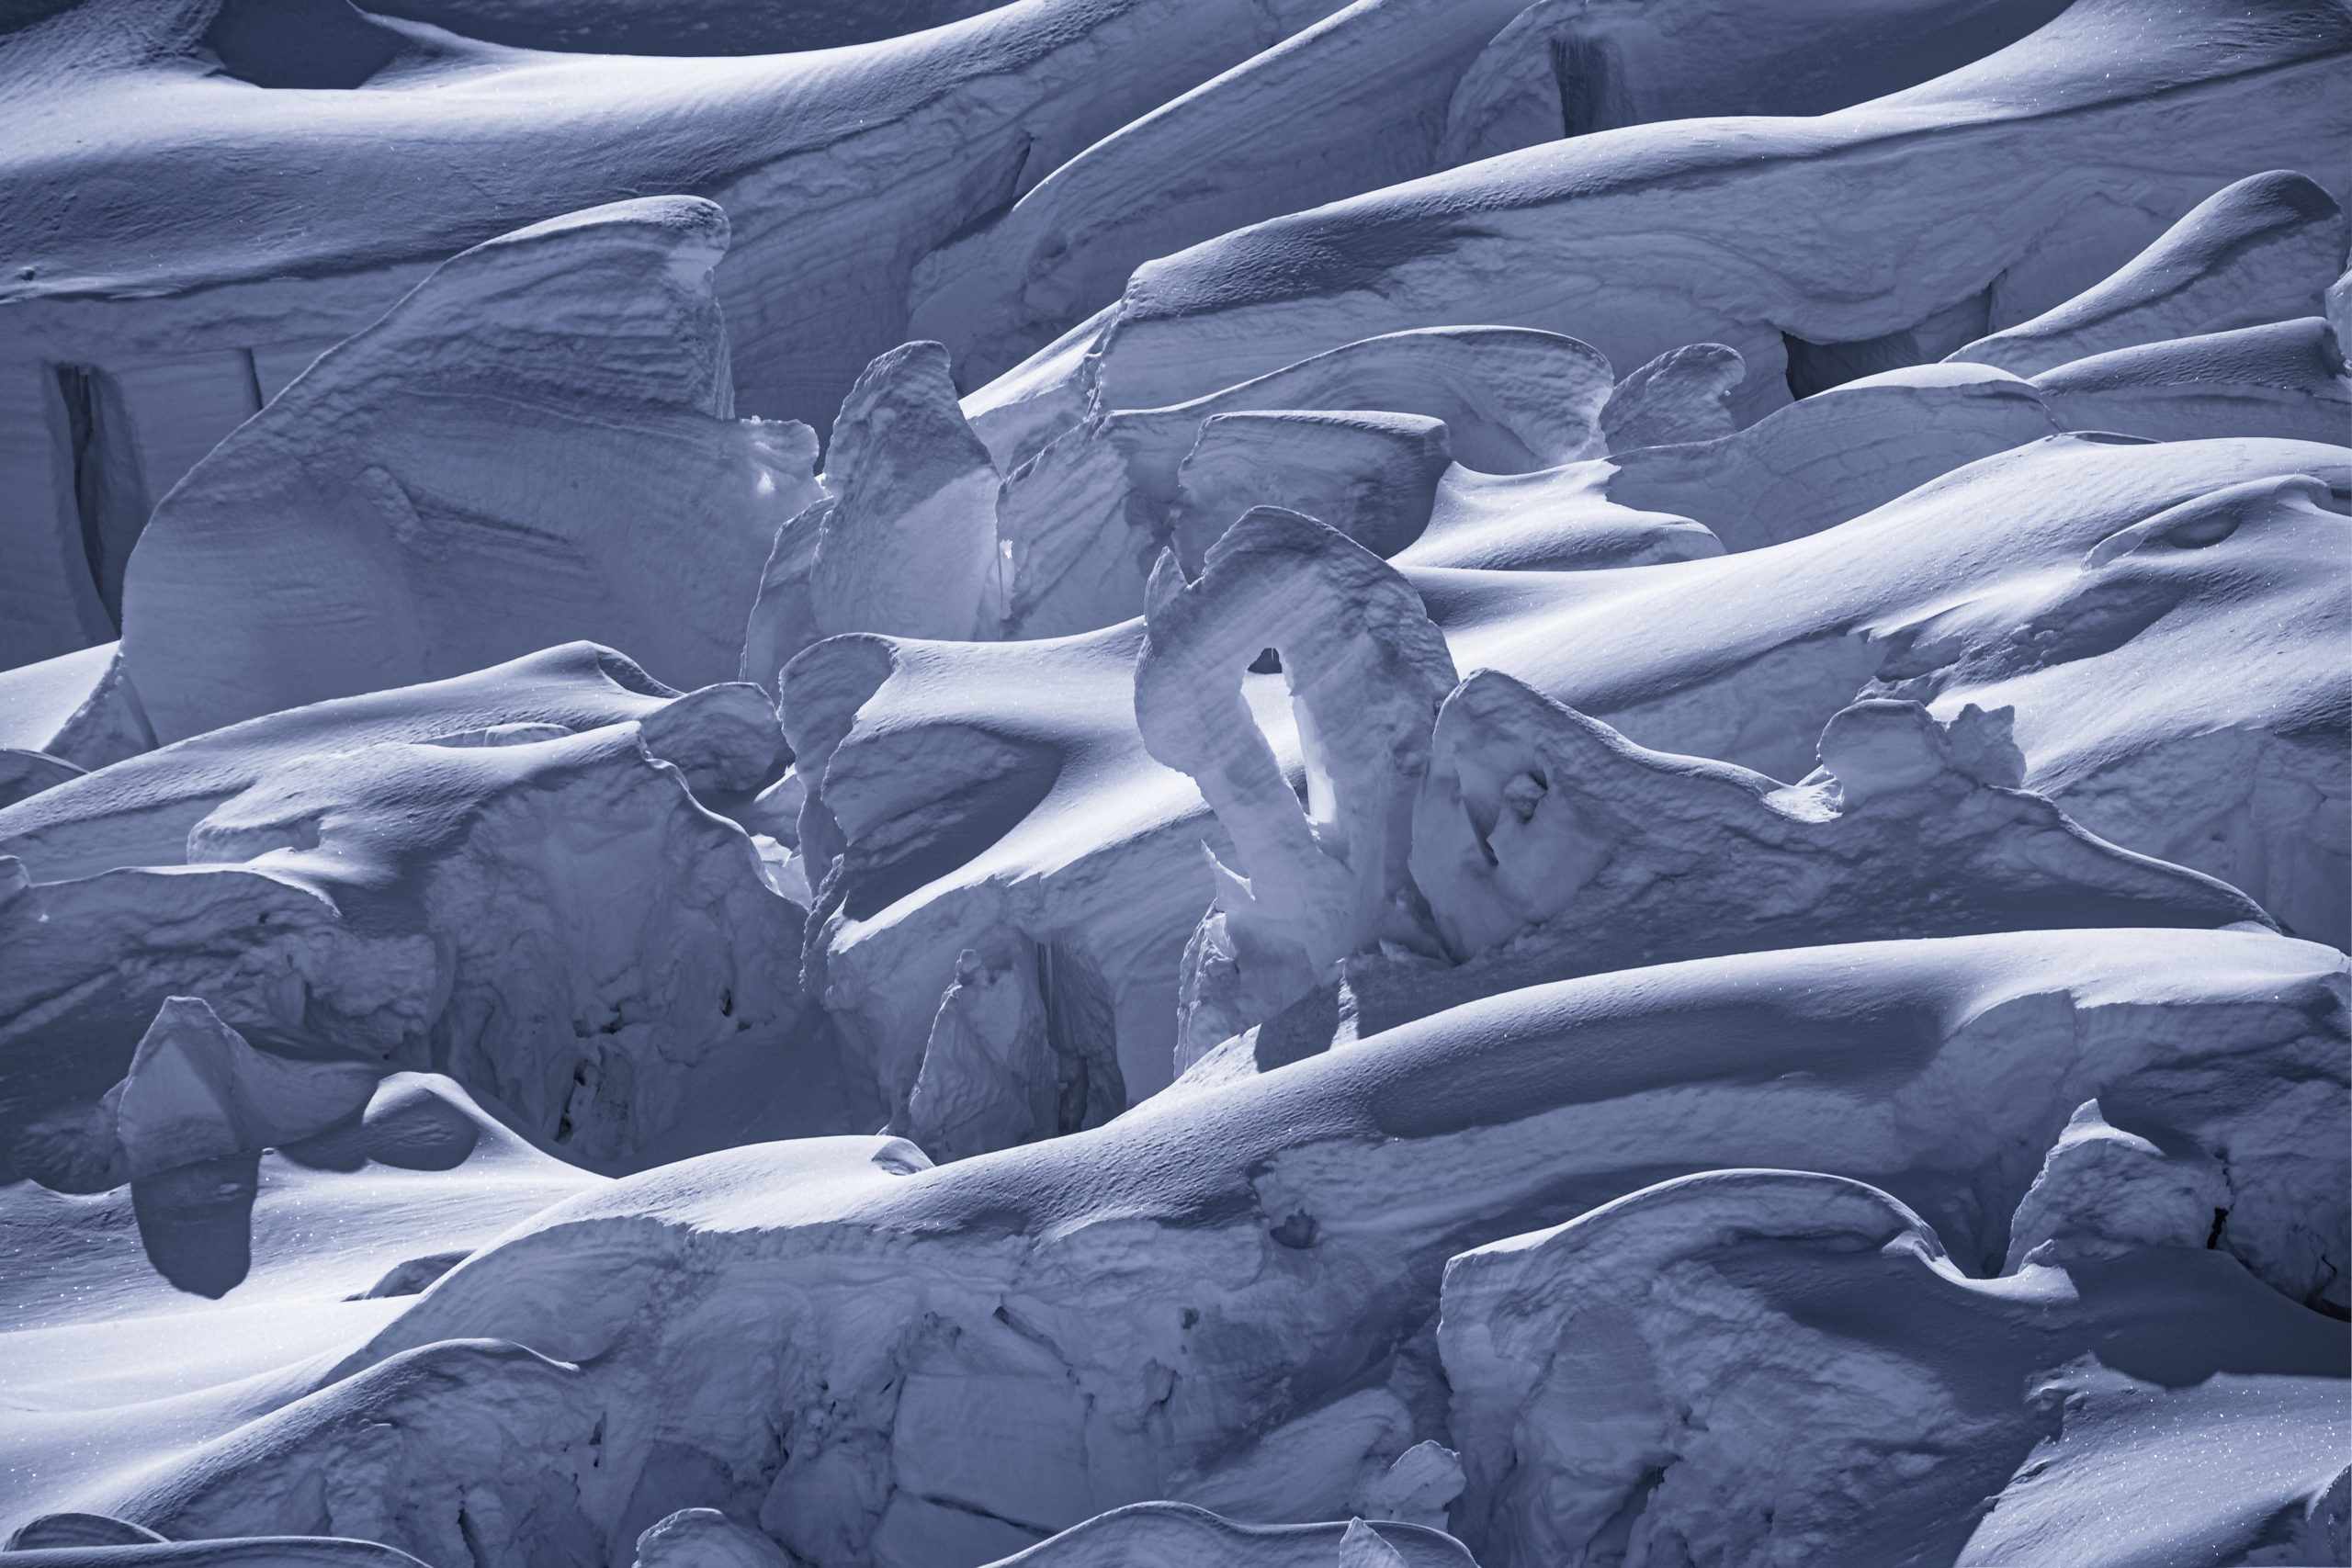 Unique ice formations found in a glacier in the Antarctic Peninsula